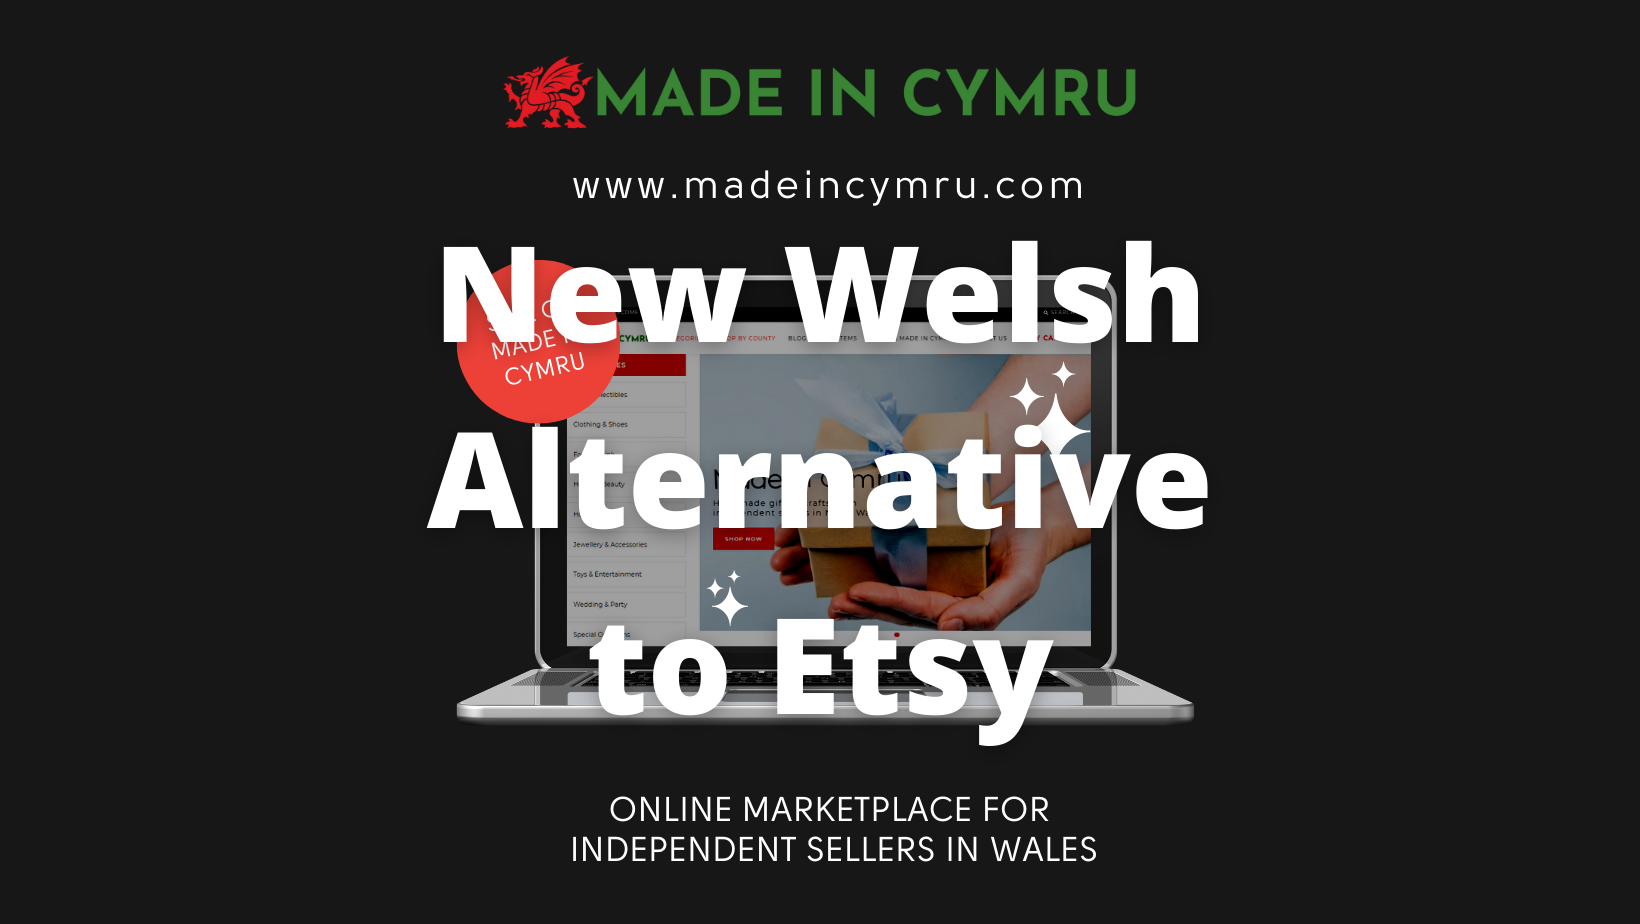 What is Made In Cymru?